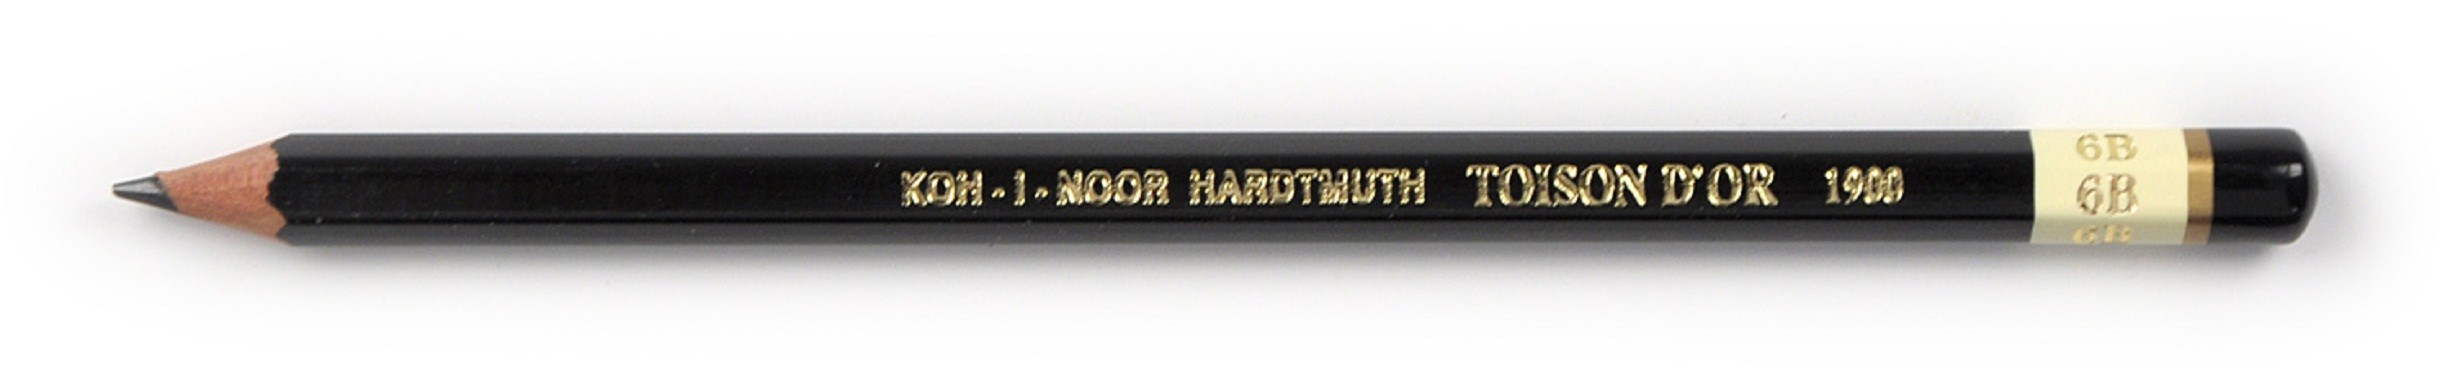 Creion tehnic Toison D'or Art KOH-I-NOOR, duritate 6B